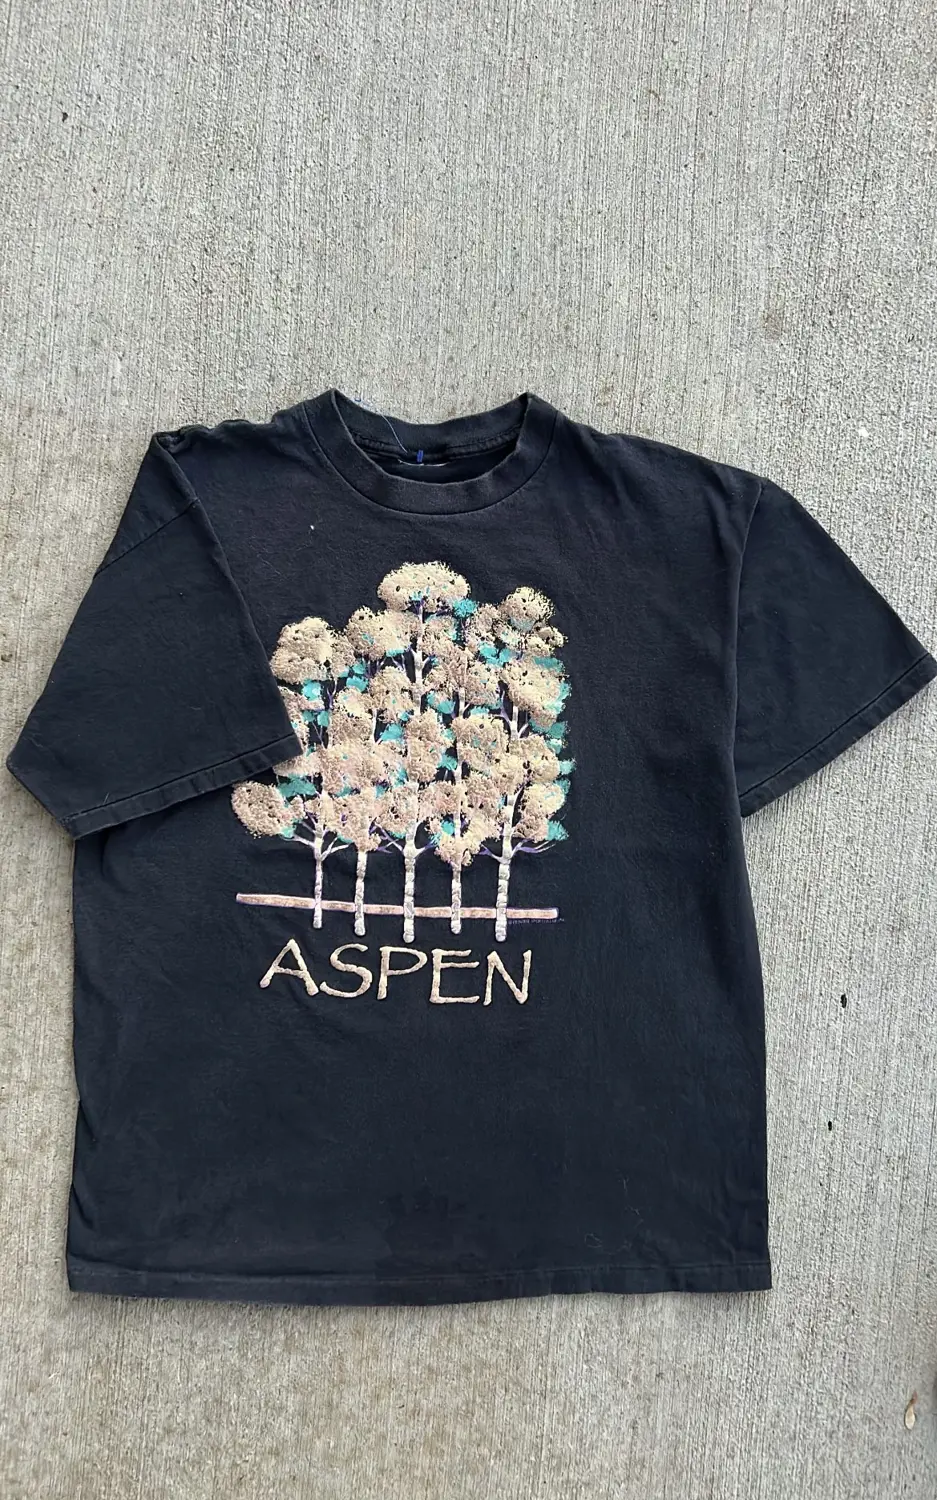 Aspen tshirt